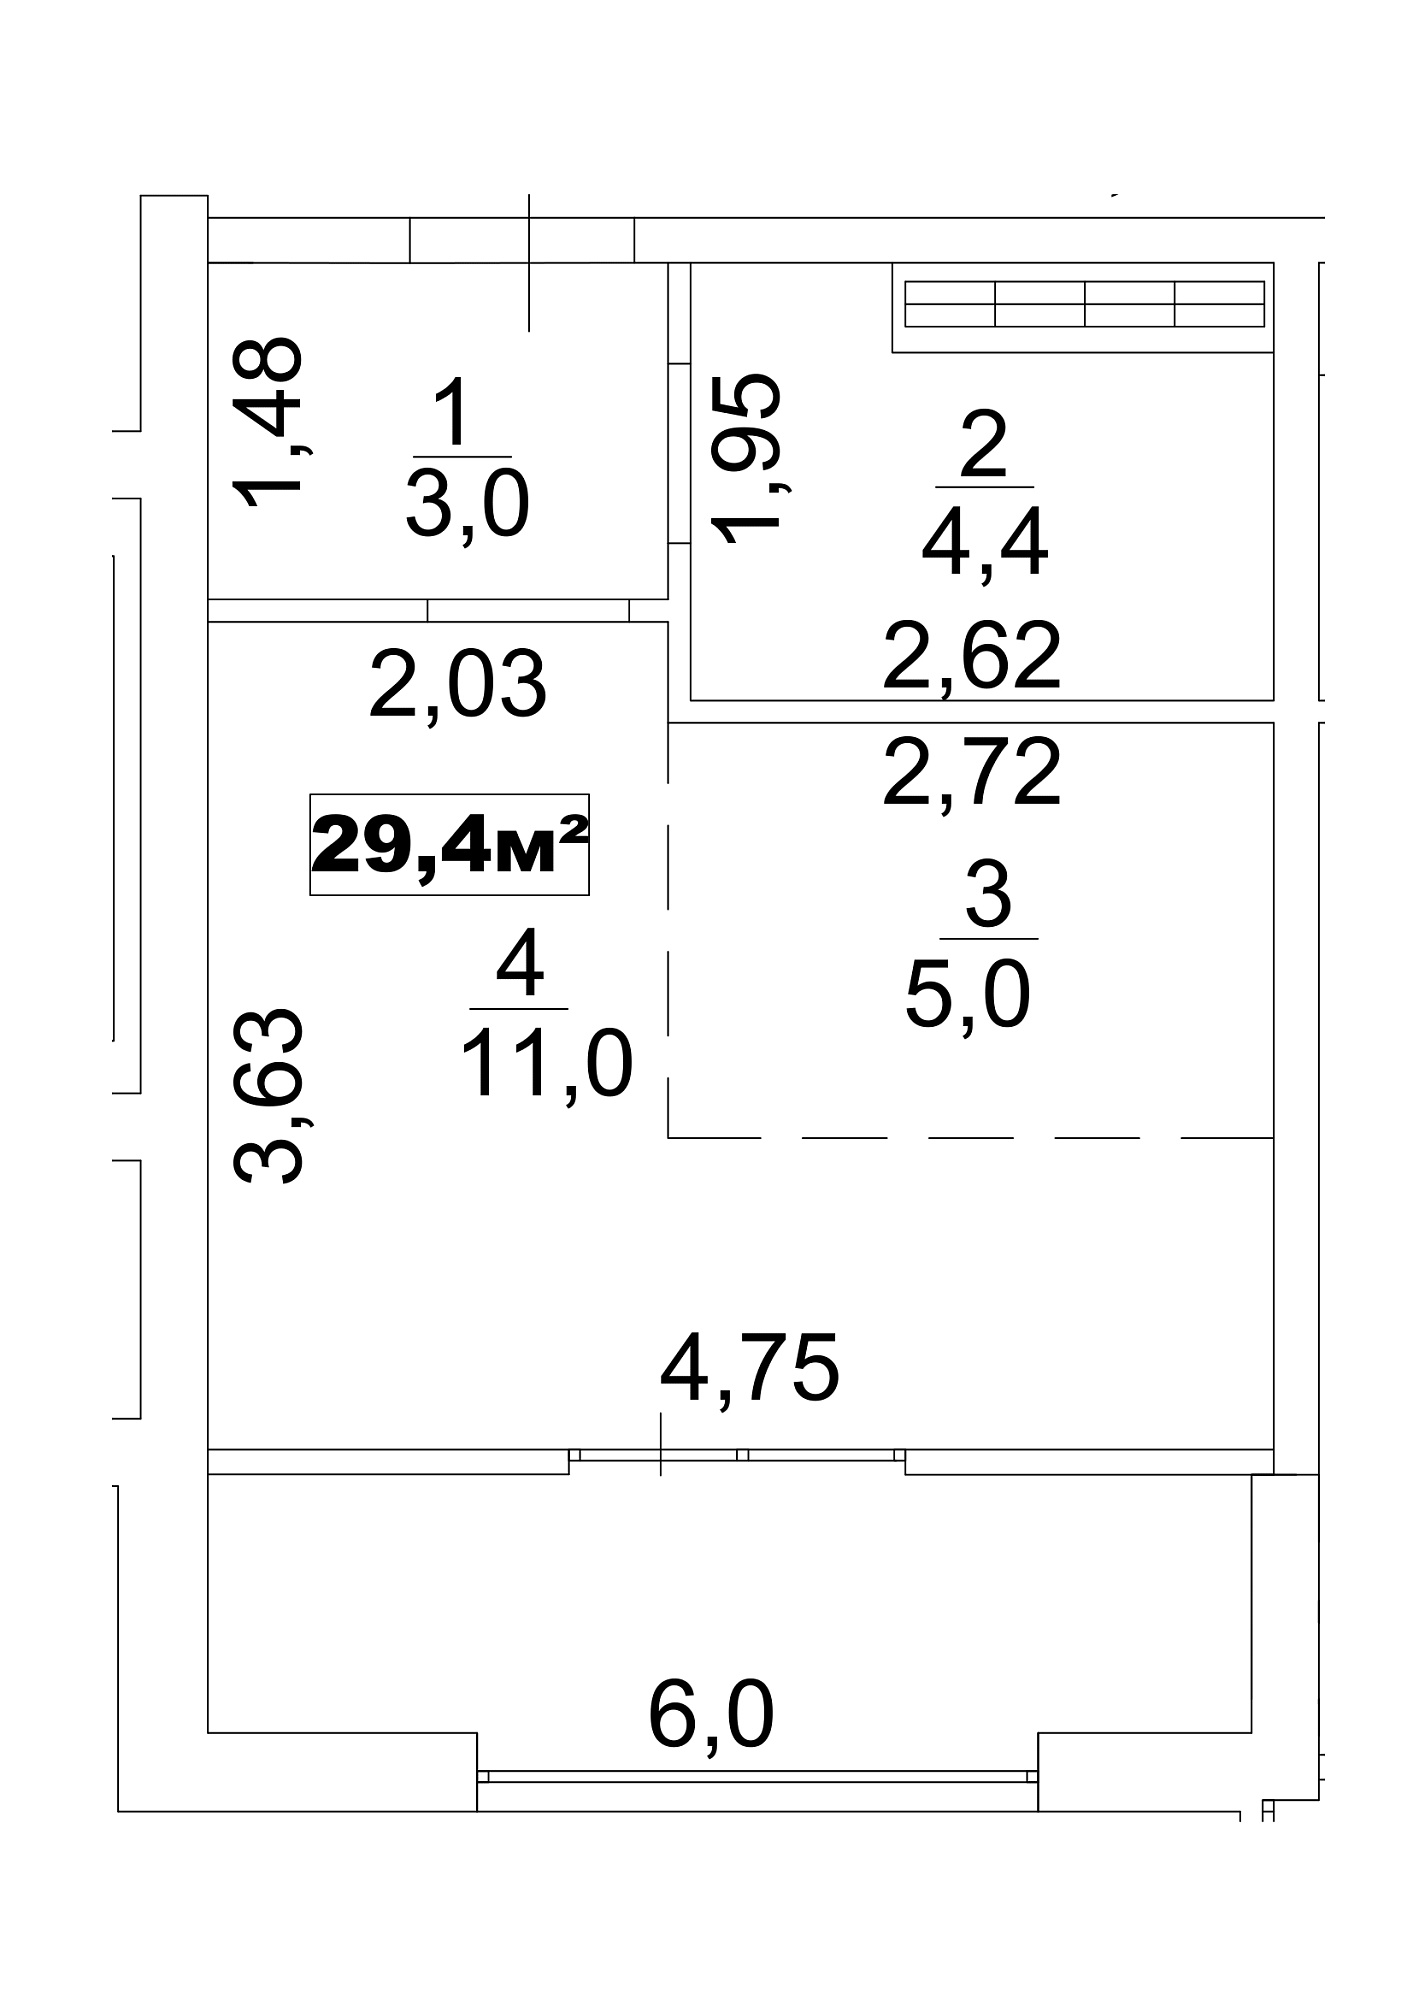 Planning Smart flats area 29.4m2, AB-13-10/00087.